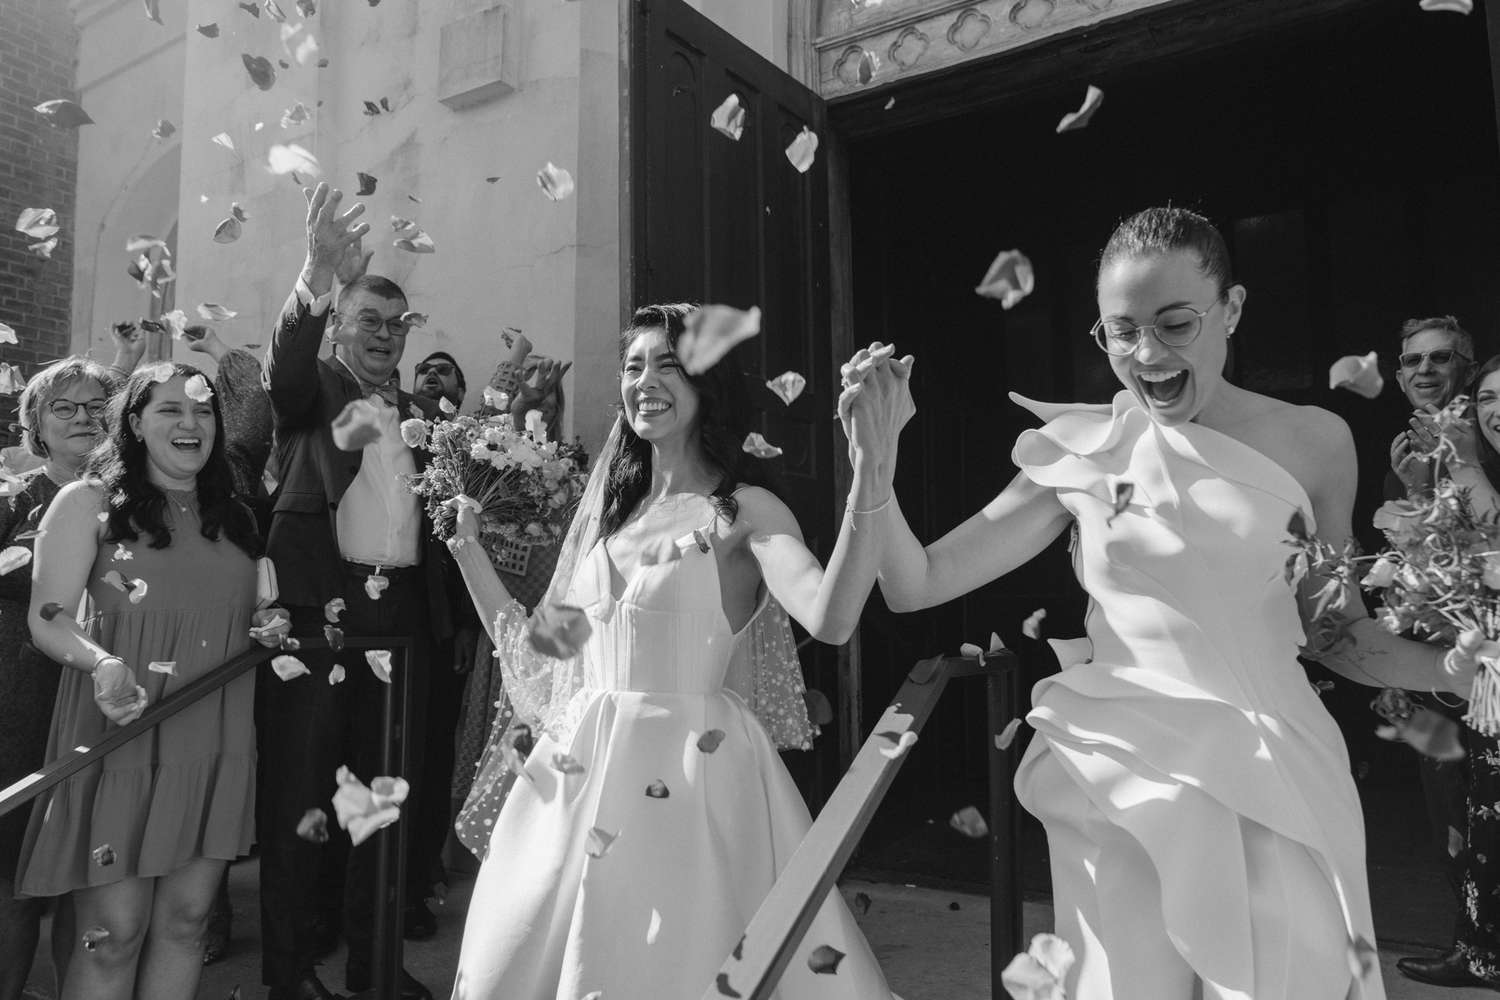 brides exiting the ceremony venue as guests toss flower petals